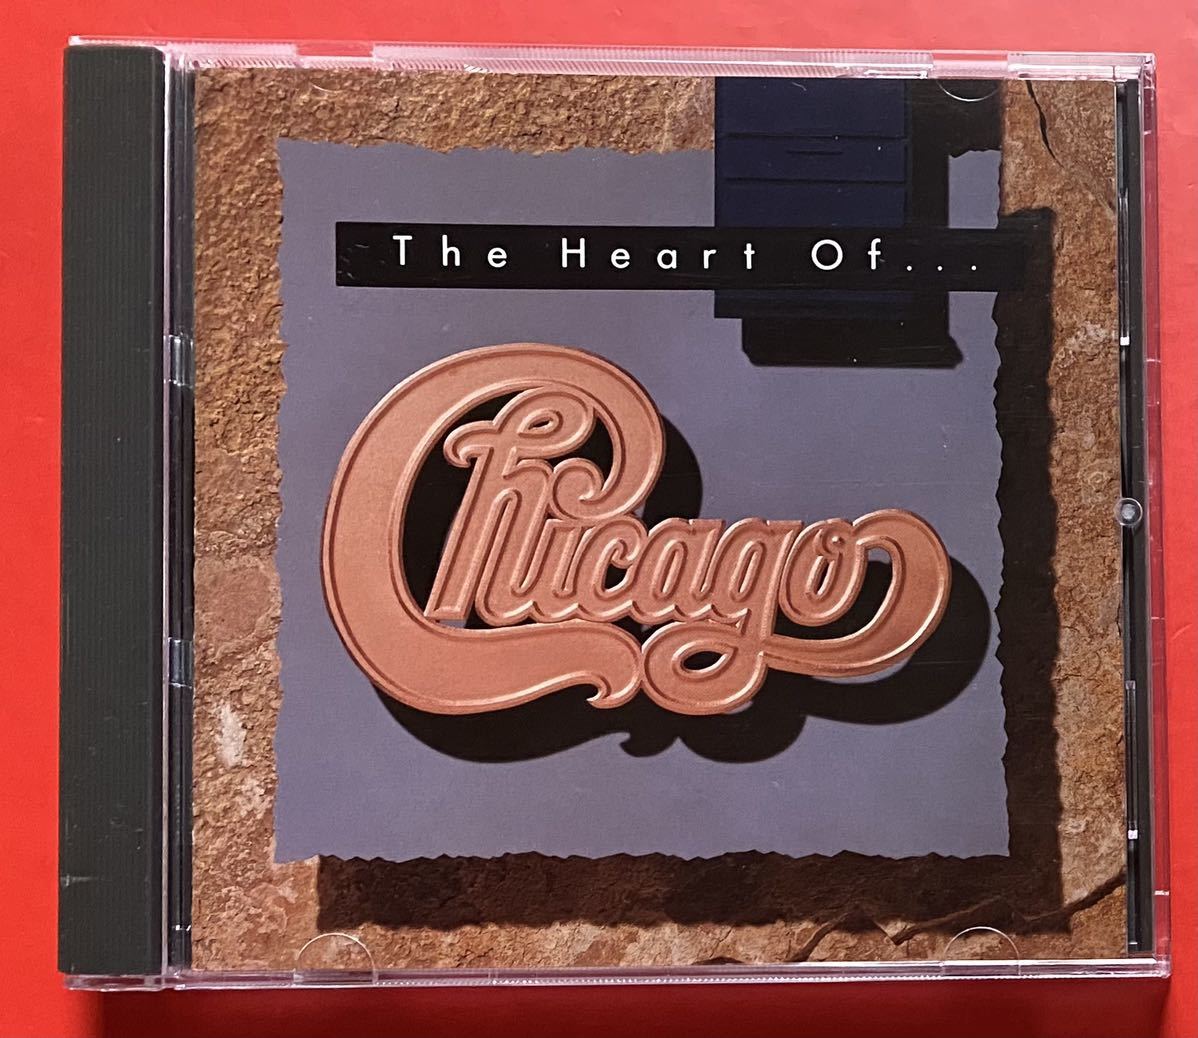 [CD] Chicago [The Heart Of Chicago] записано в Японии [10070290]